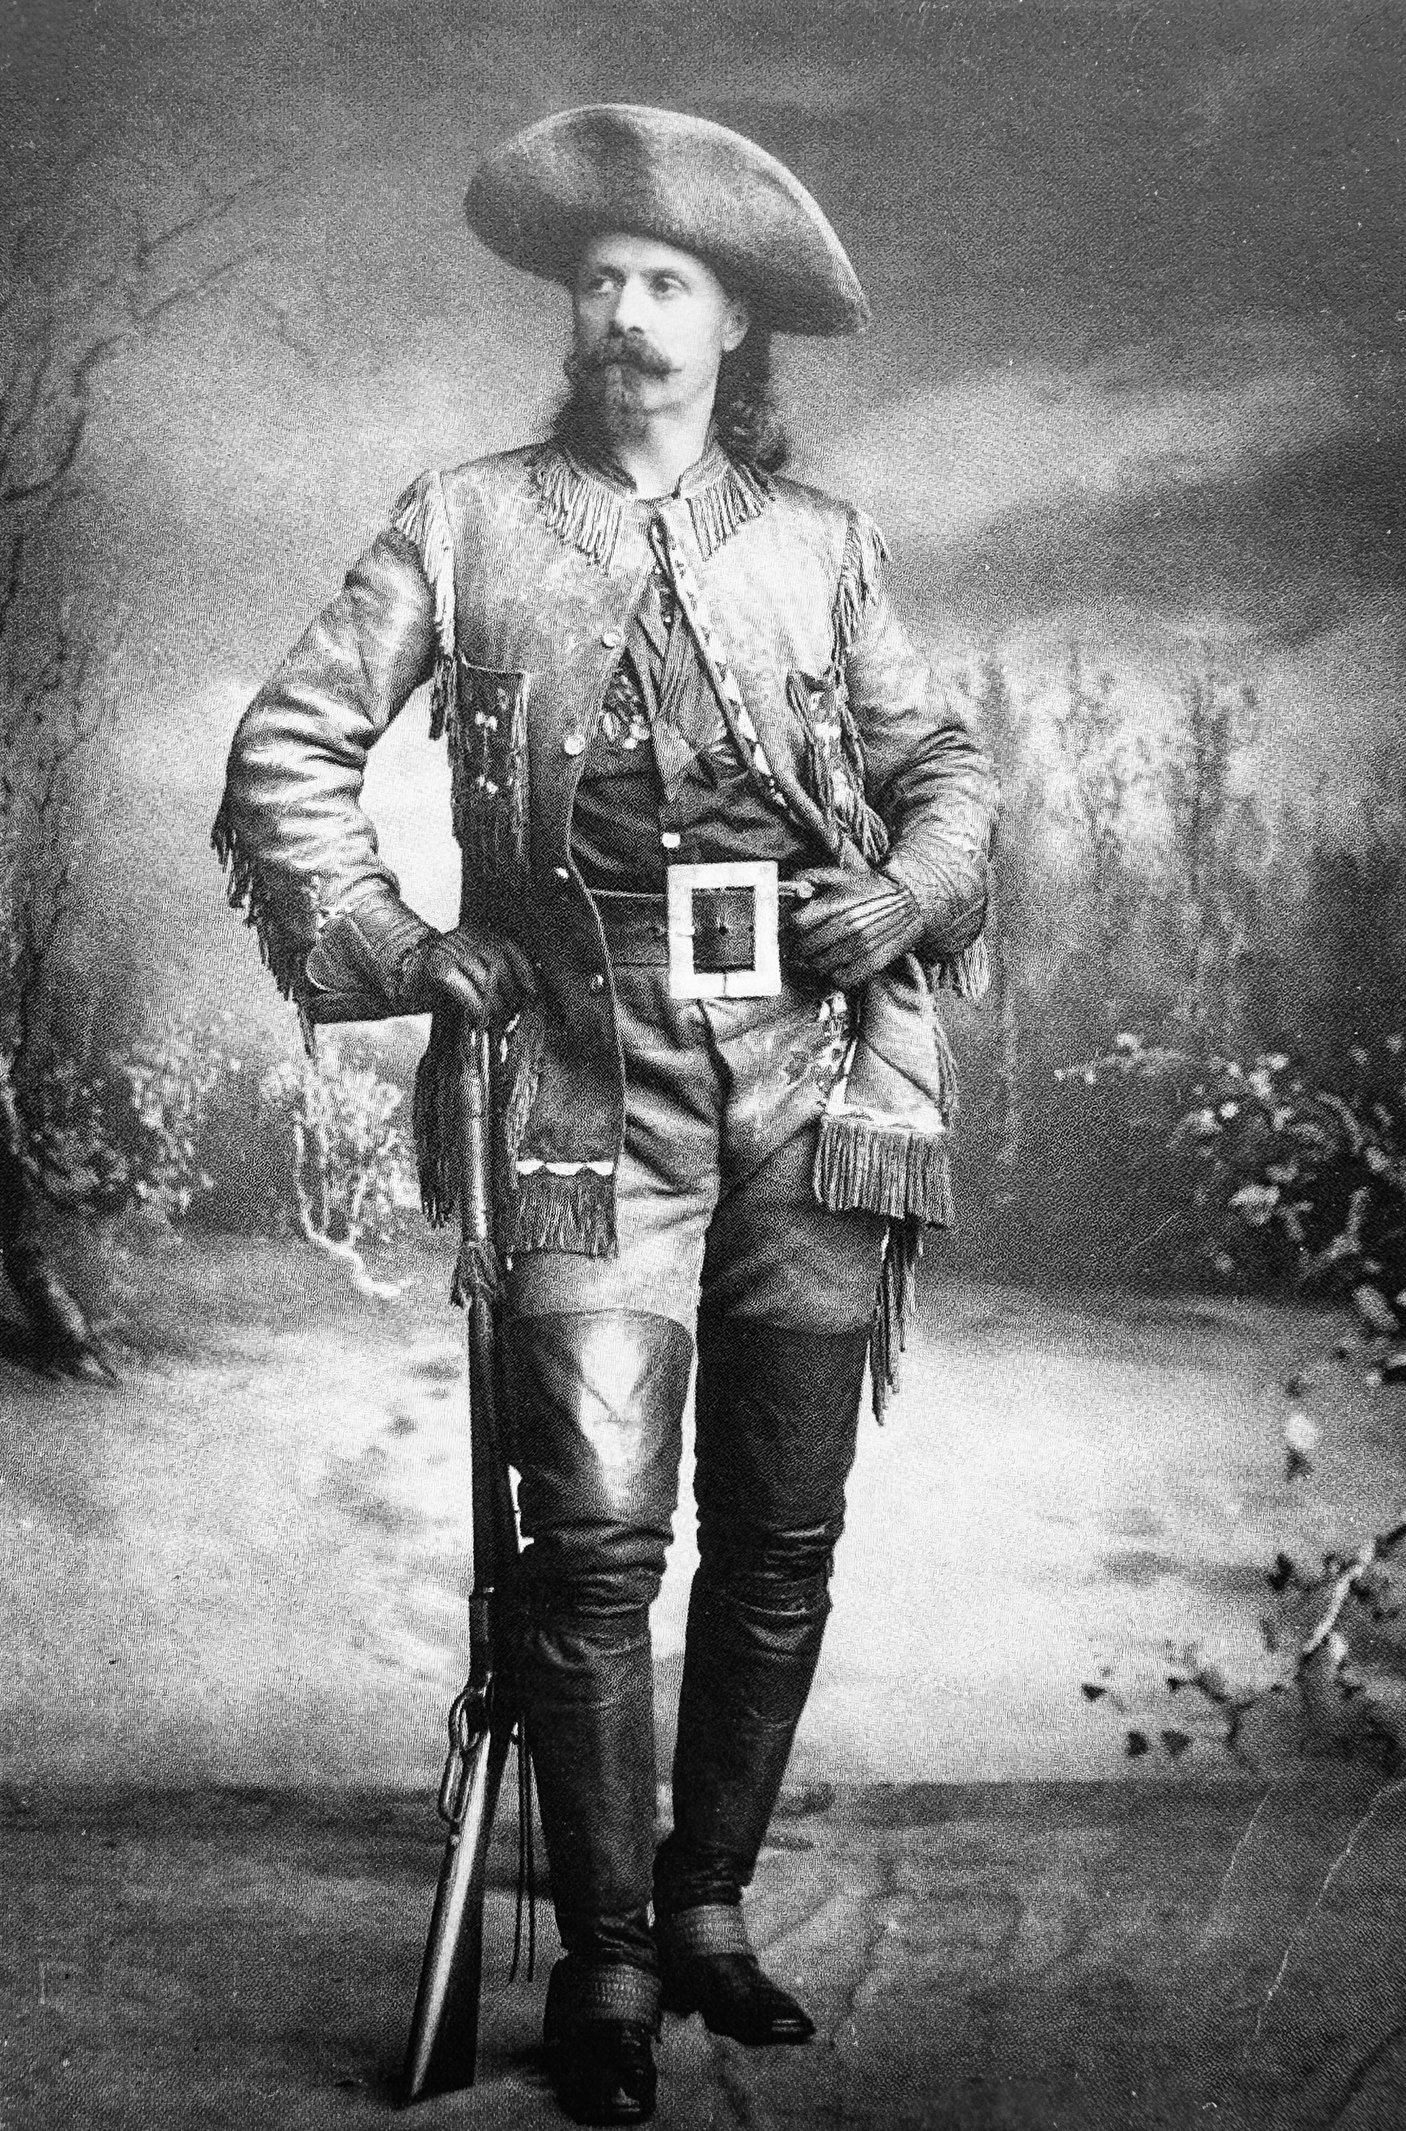 An Illustration from 19th century of Buffalo Bill Cody